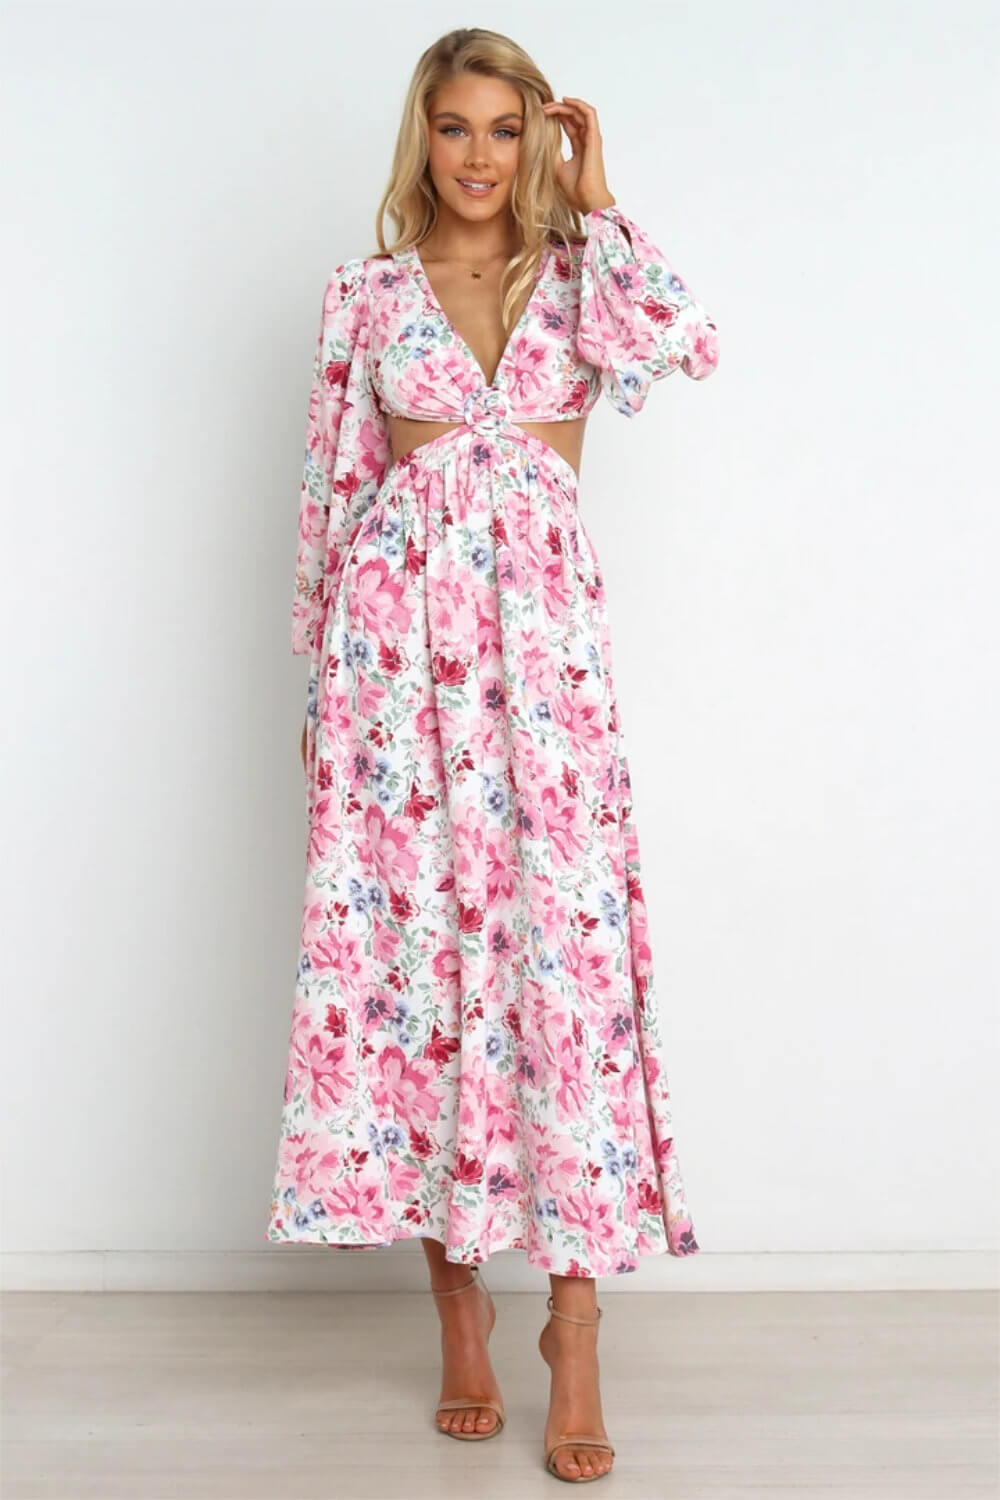 Classy Honeymoon Outfits Elegant Honeymoon Dresses Pink Floral Print Dress